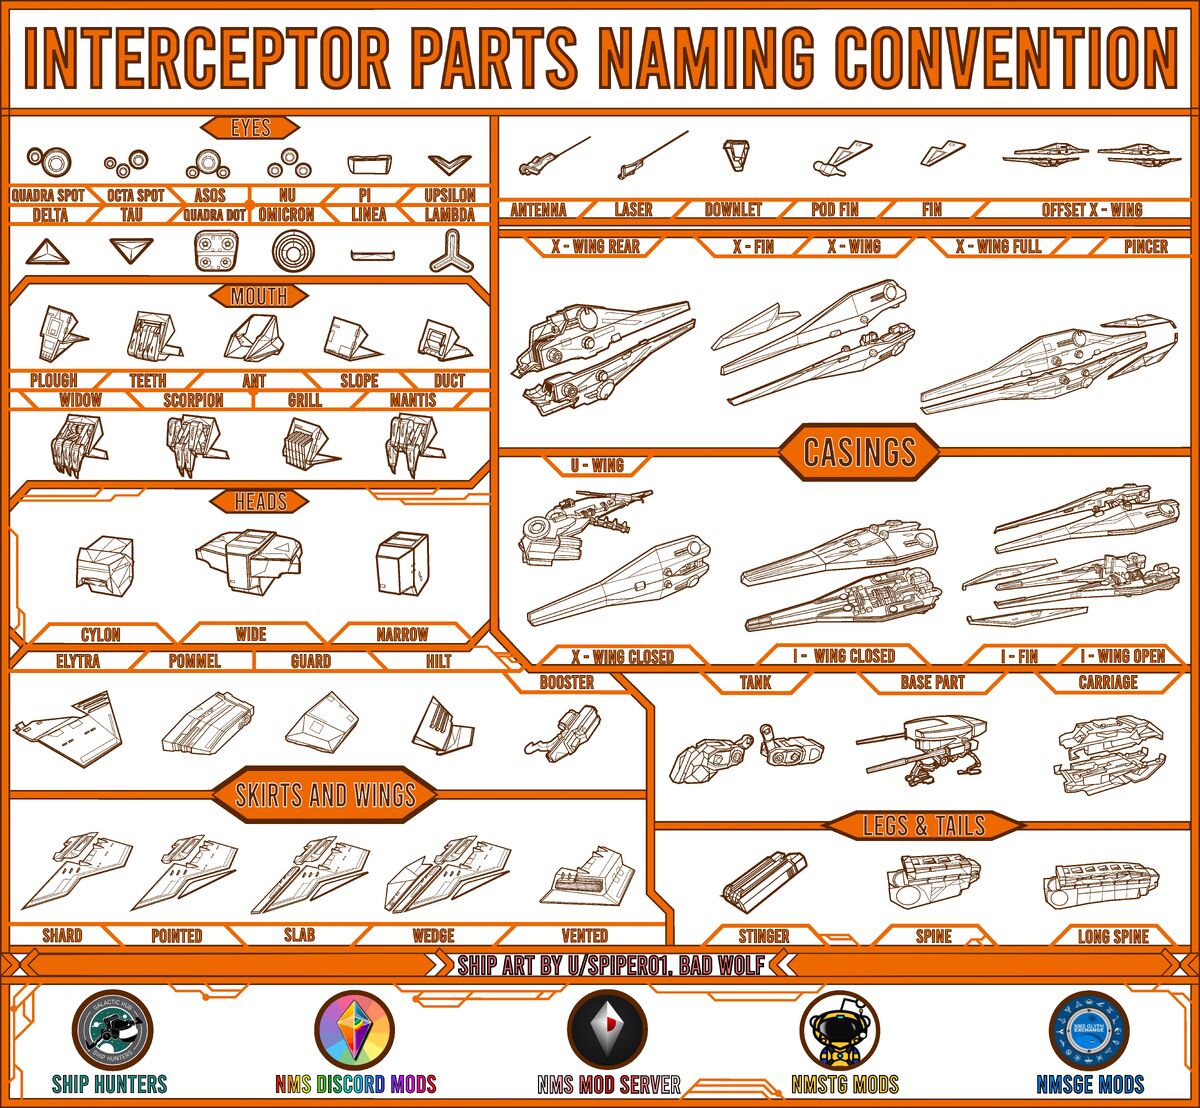 Interceptor Parts Catalogue - No Man's Sky Wiki